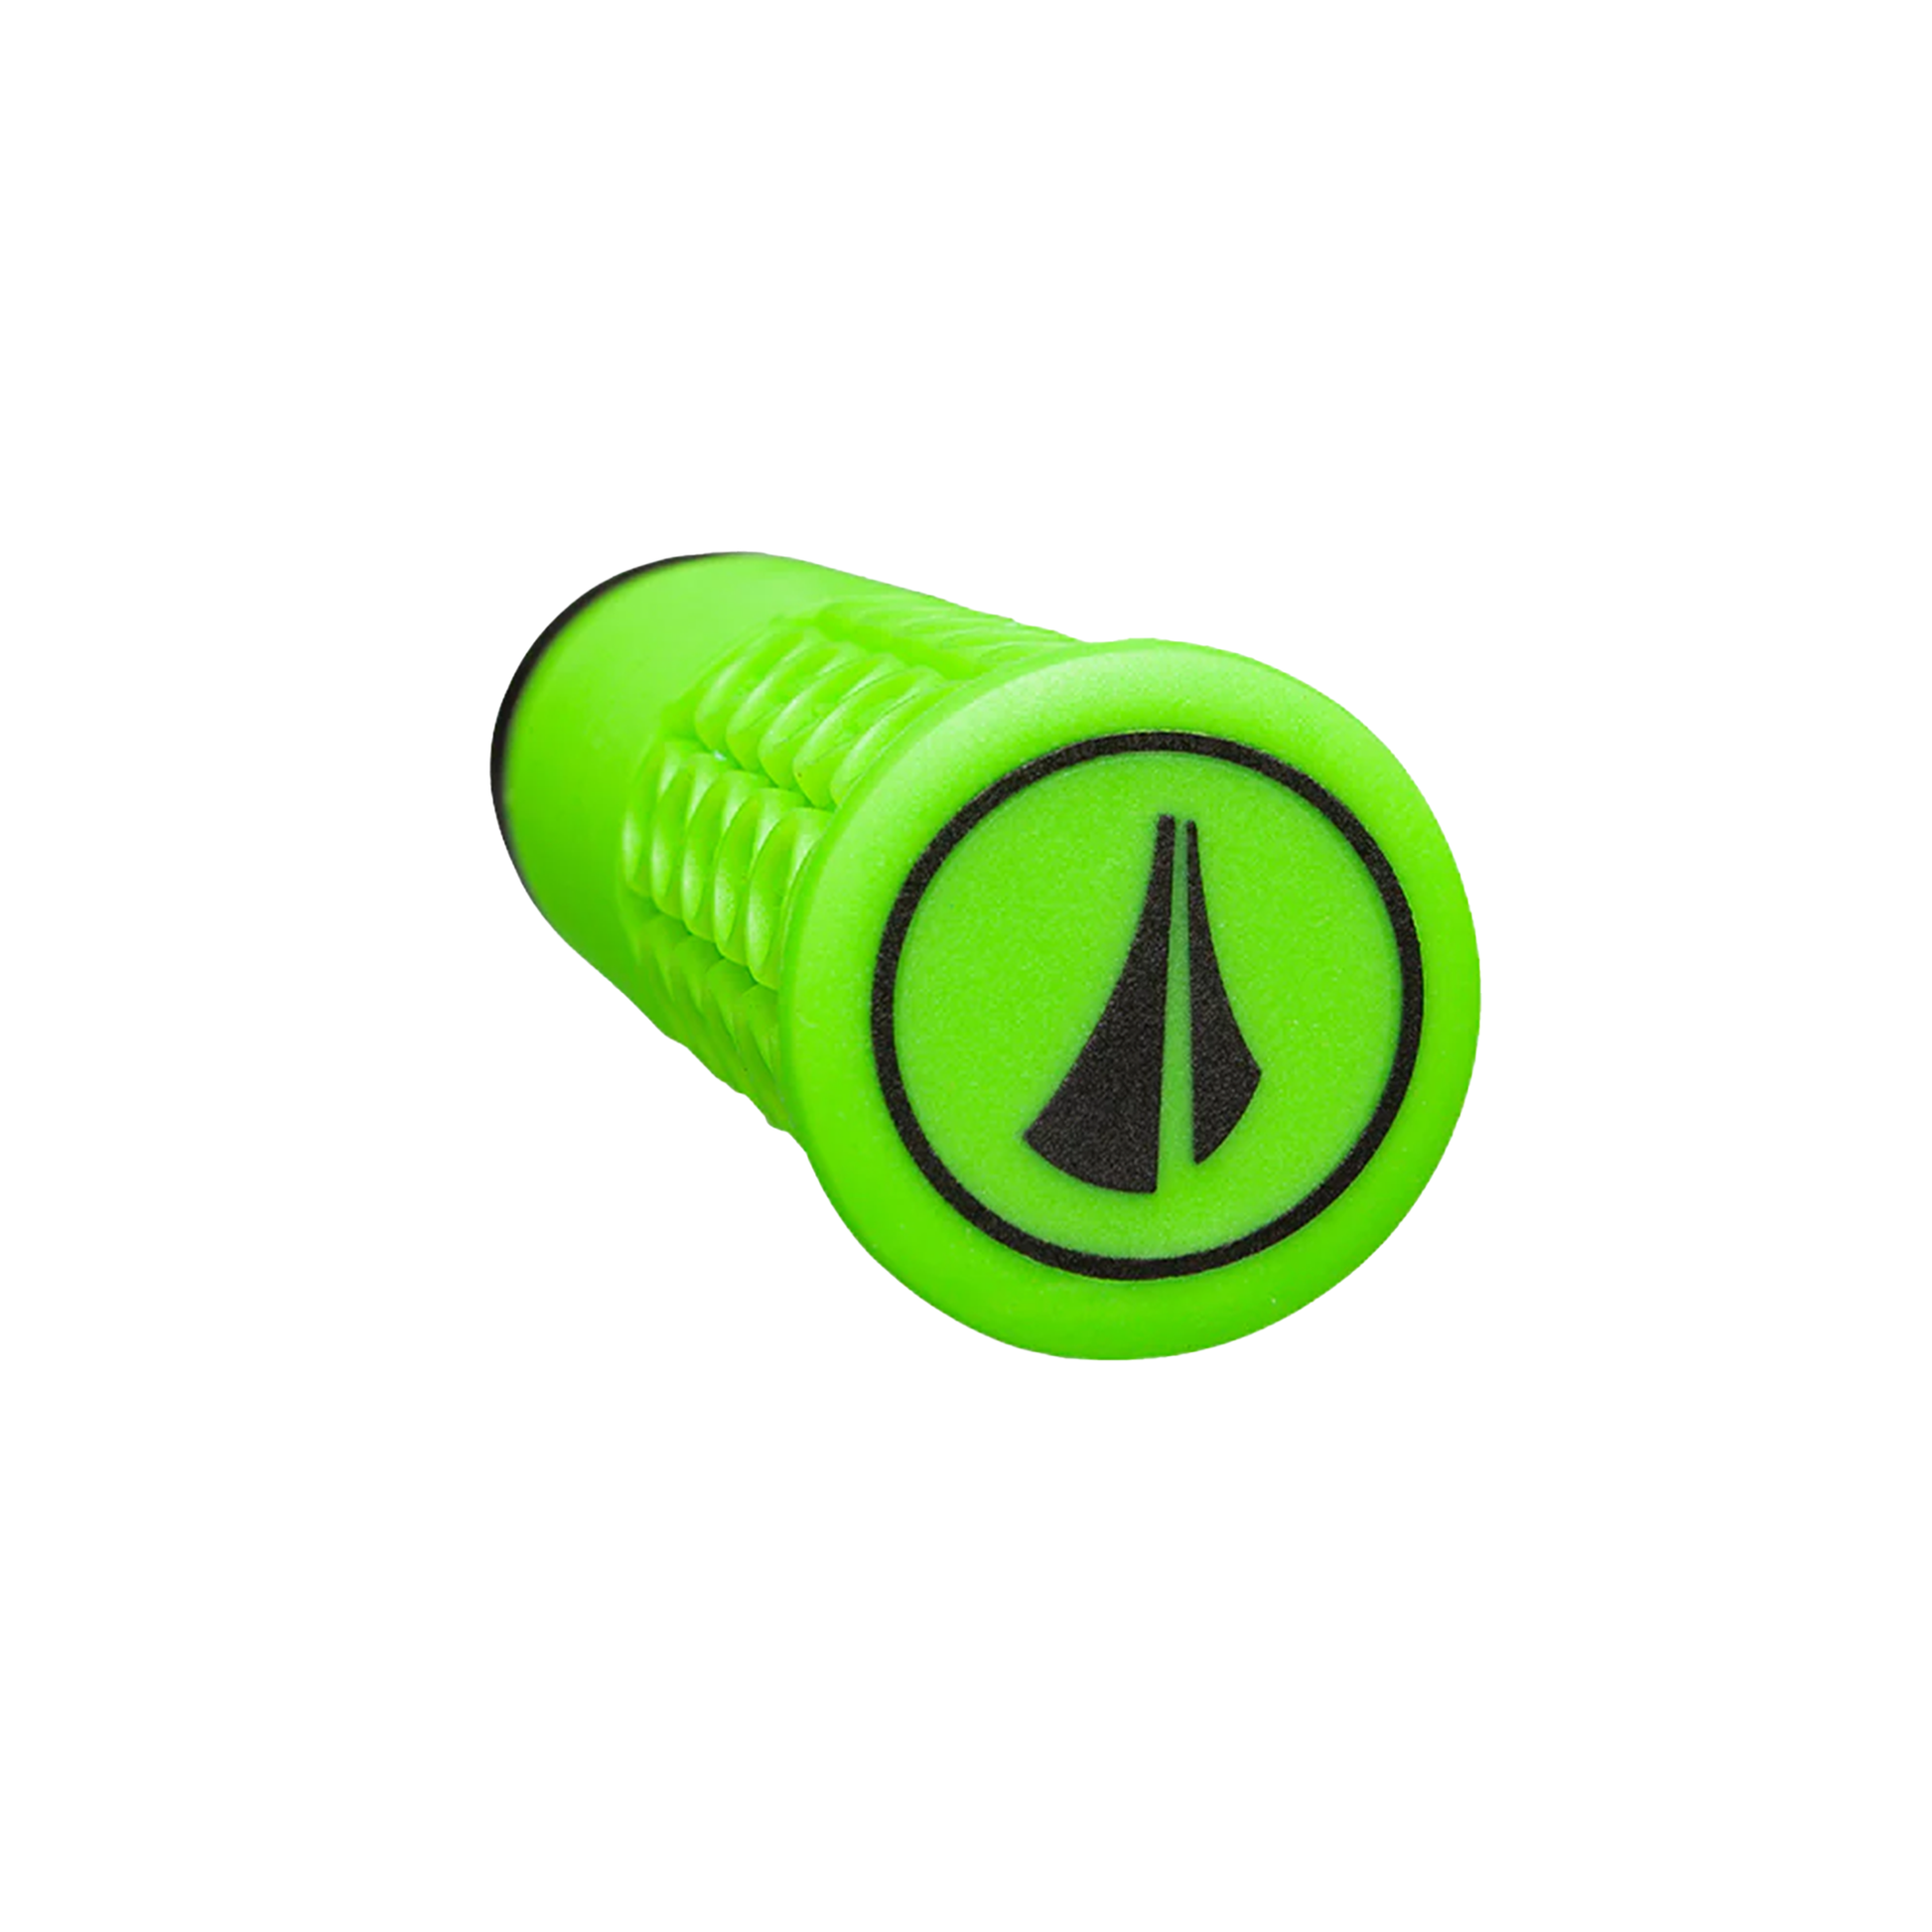 SDG Thrice 33 Lock On Grips Neon Green OS Grips & Tape